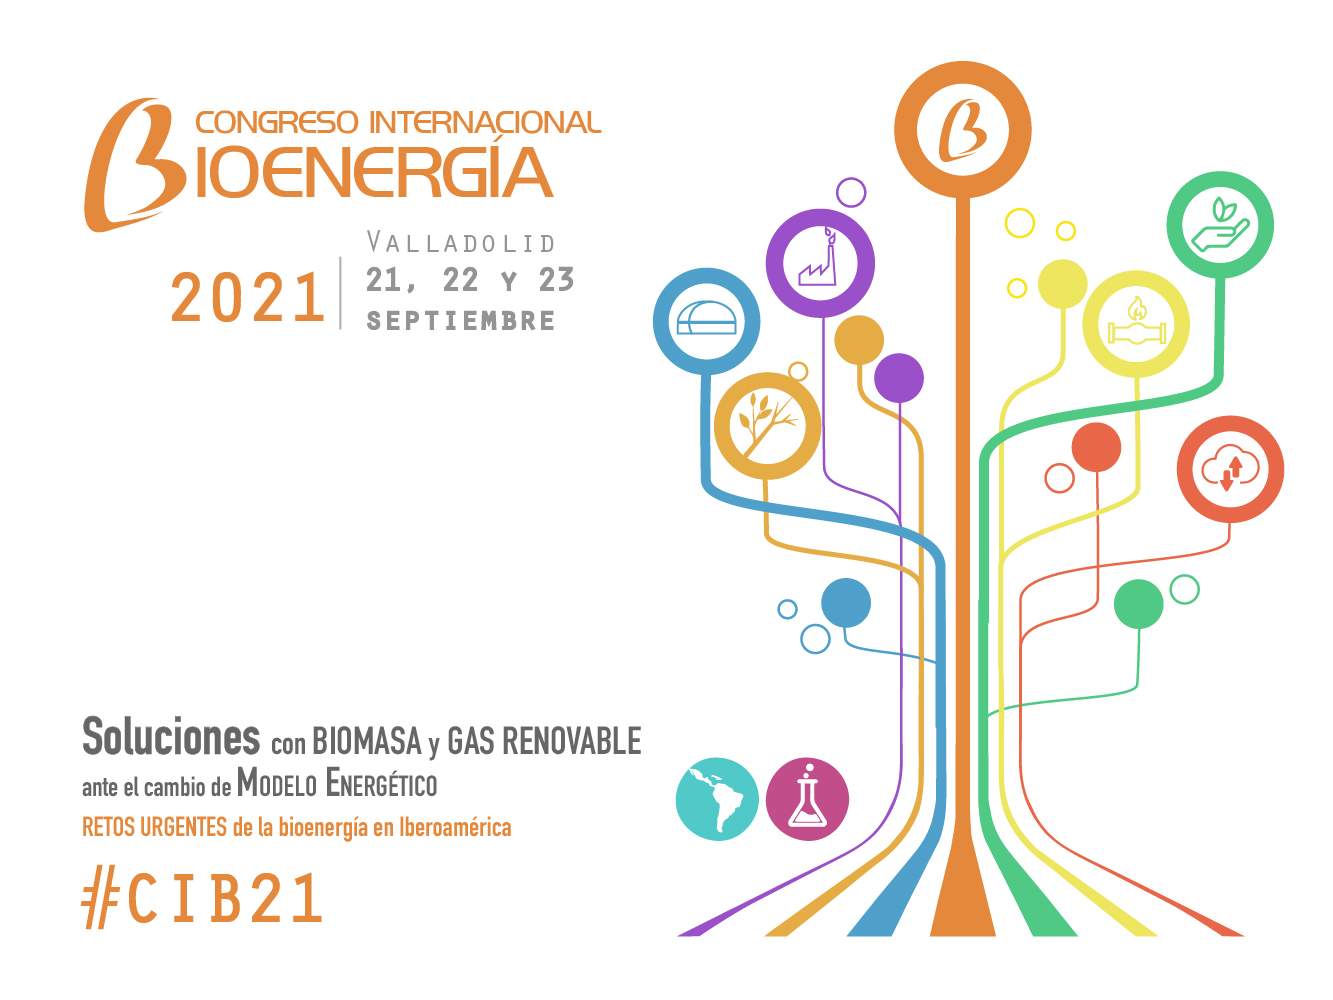 CIB21 congreso bioenergia de avebiom 2021